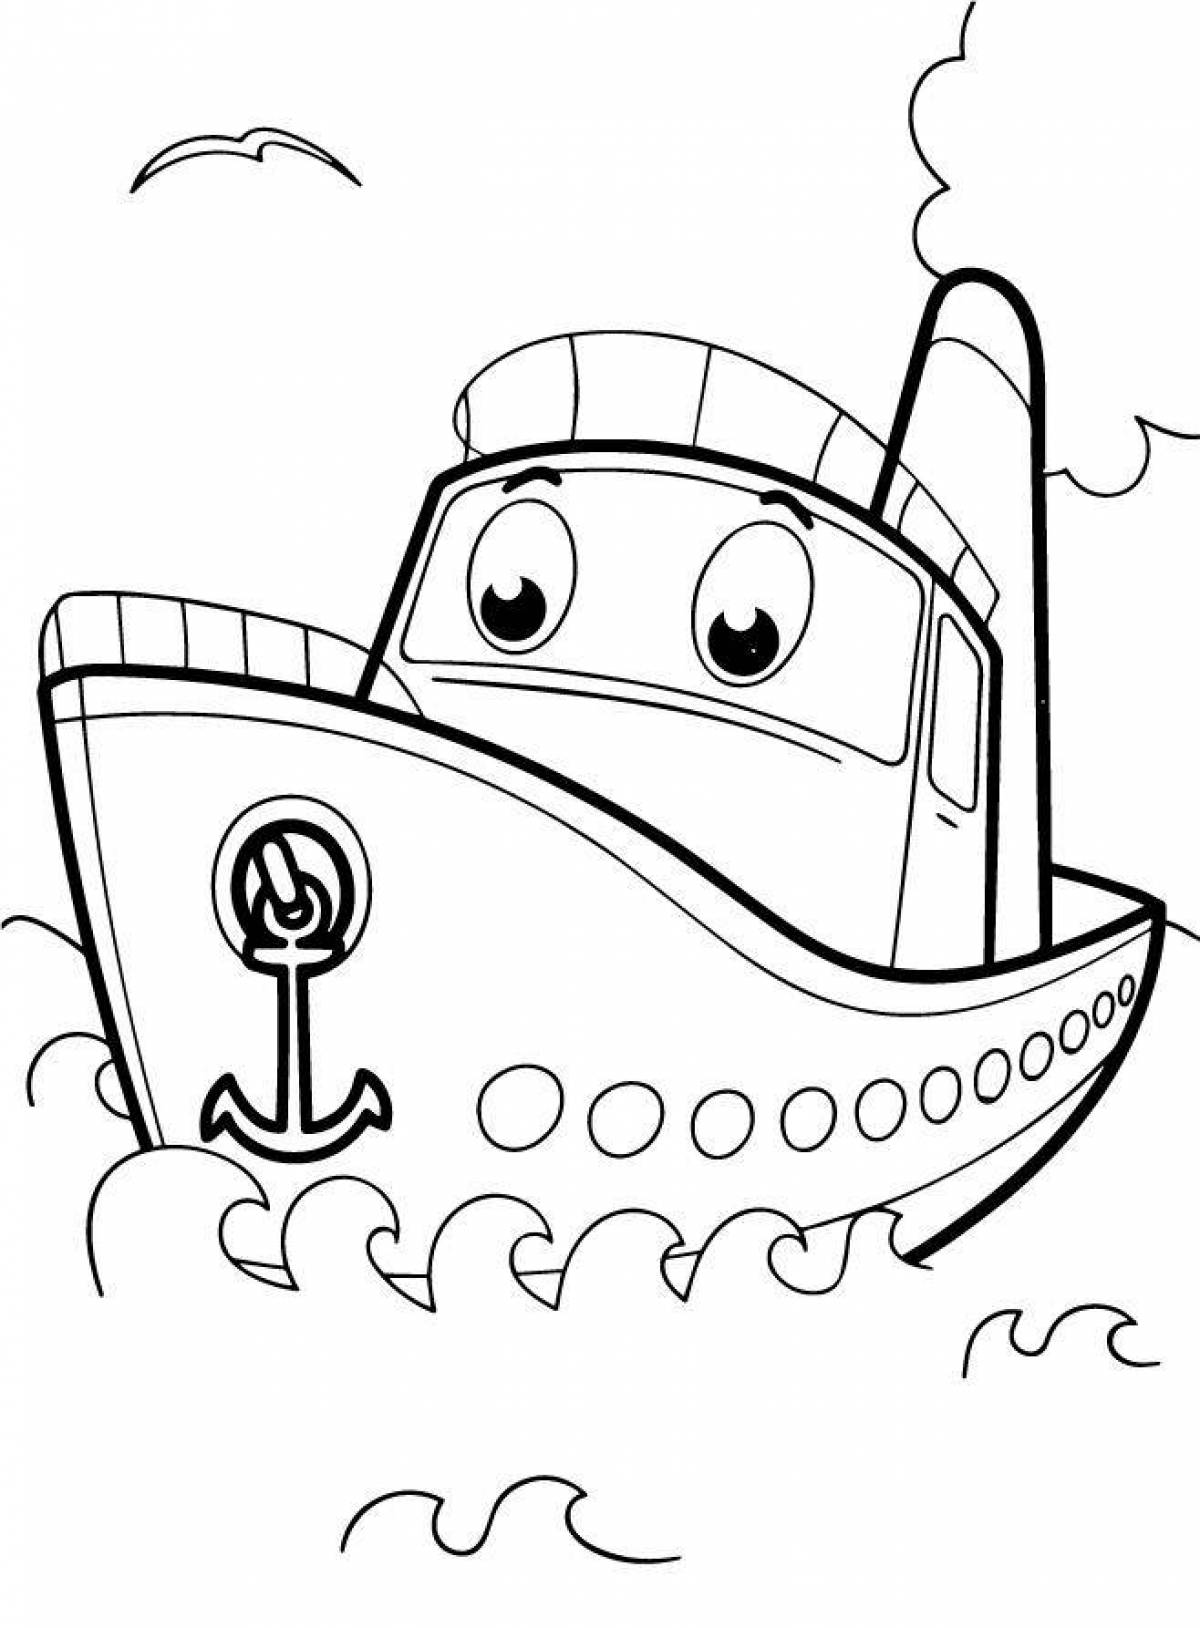 Fun boat coloring for kids